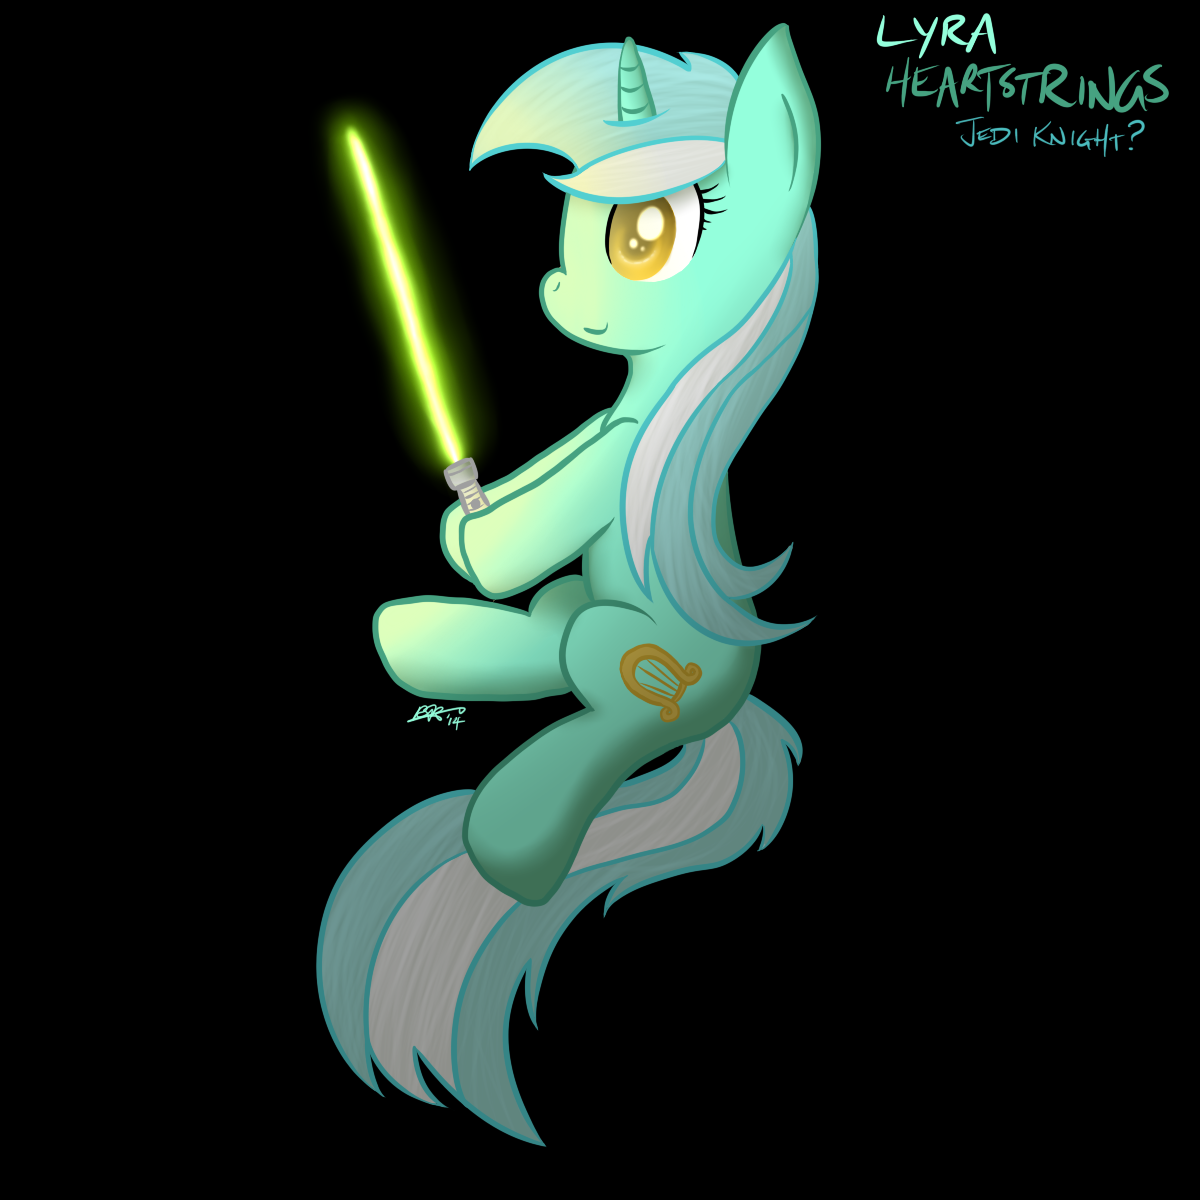 Lyra - With Lightsaber